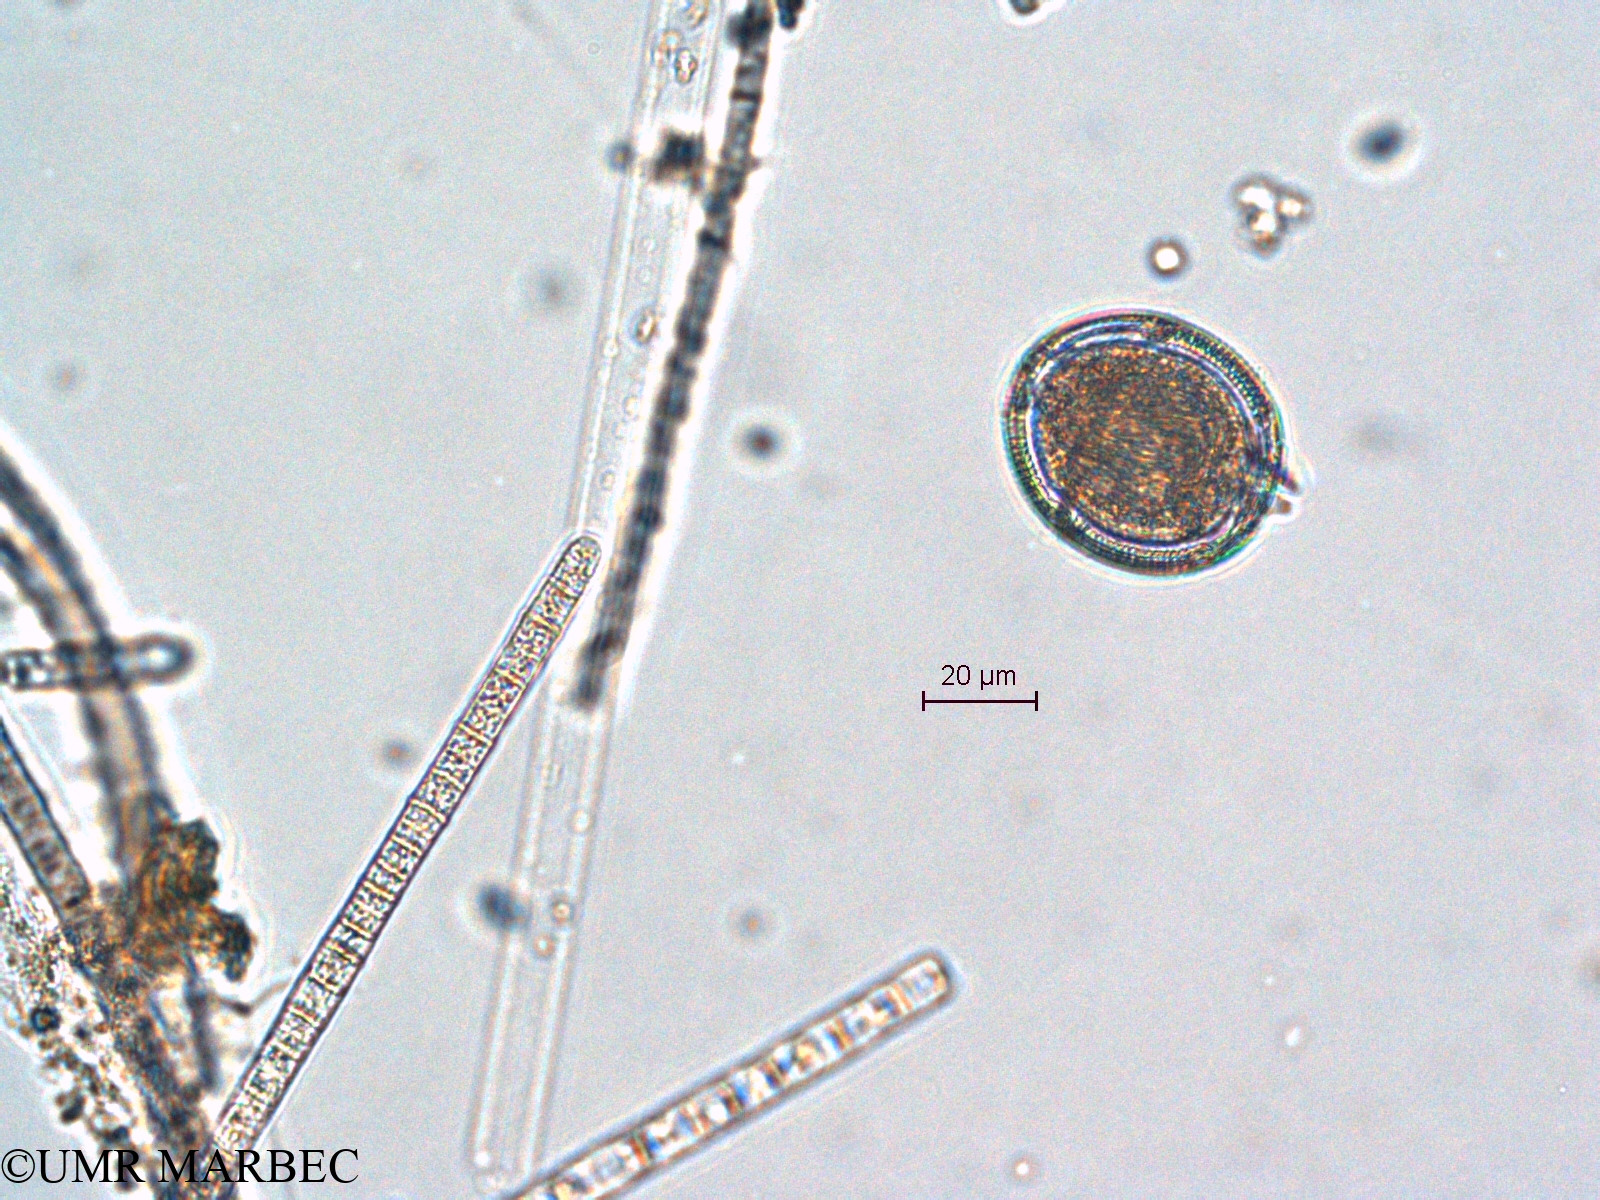 phyto/Scattered_Islands/all/COMMA April 2011/Blepharocysta sp3 (ancien Dino i cf Oblea, goniodoma ou lingulodinium -1)(copy).jpg